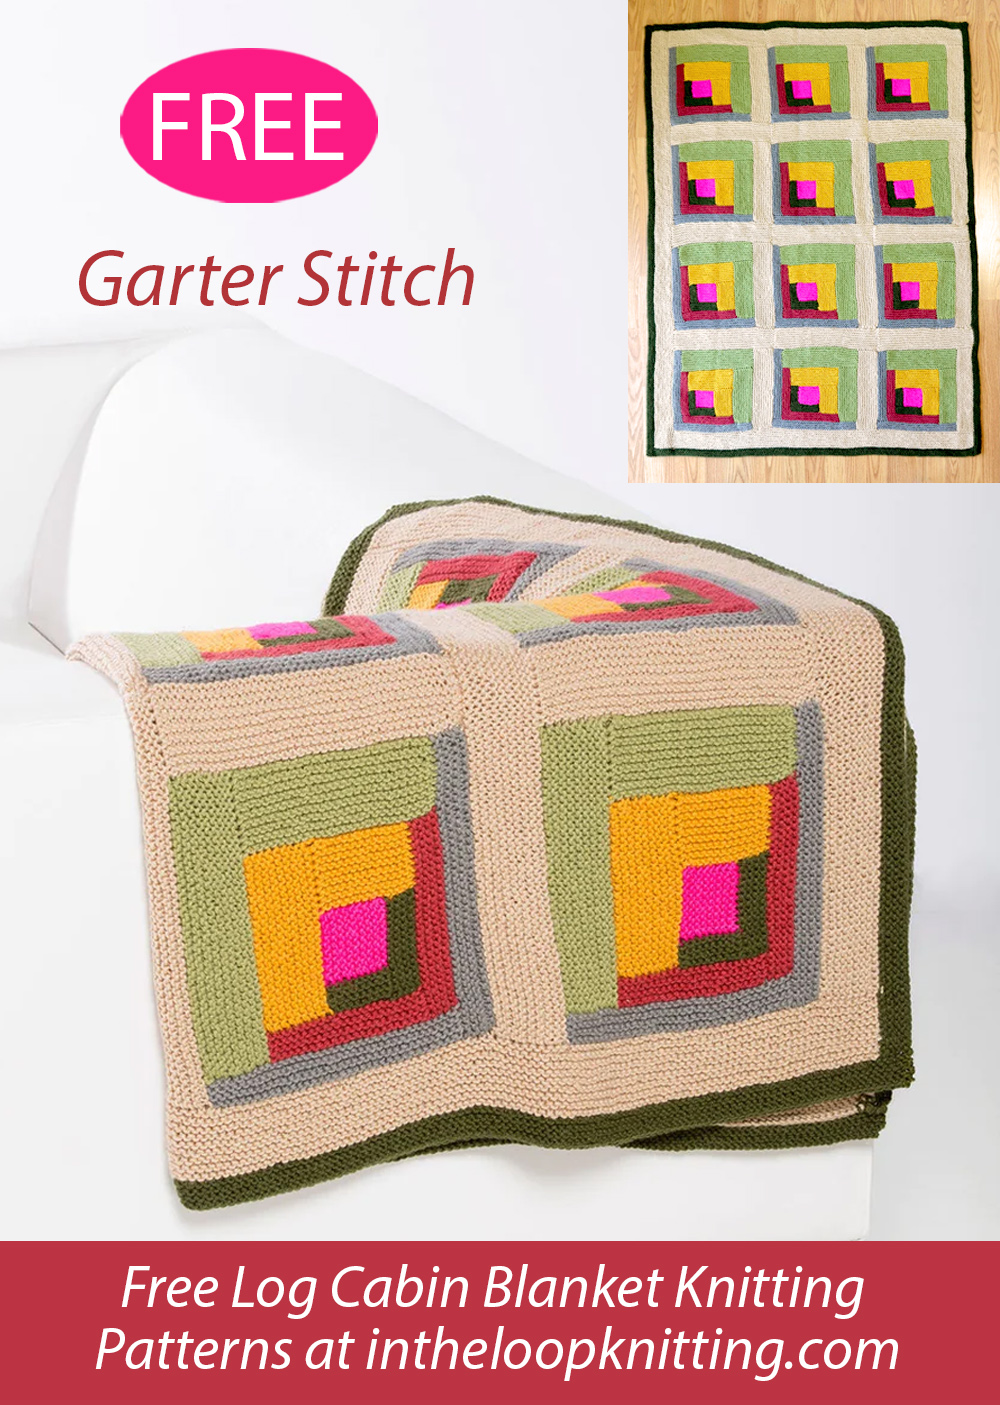 Free Grandmother’s Log Cabin Blanket Knitting Pattern Garter Stitch Stashbuster